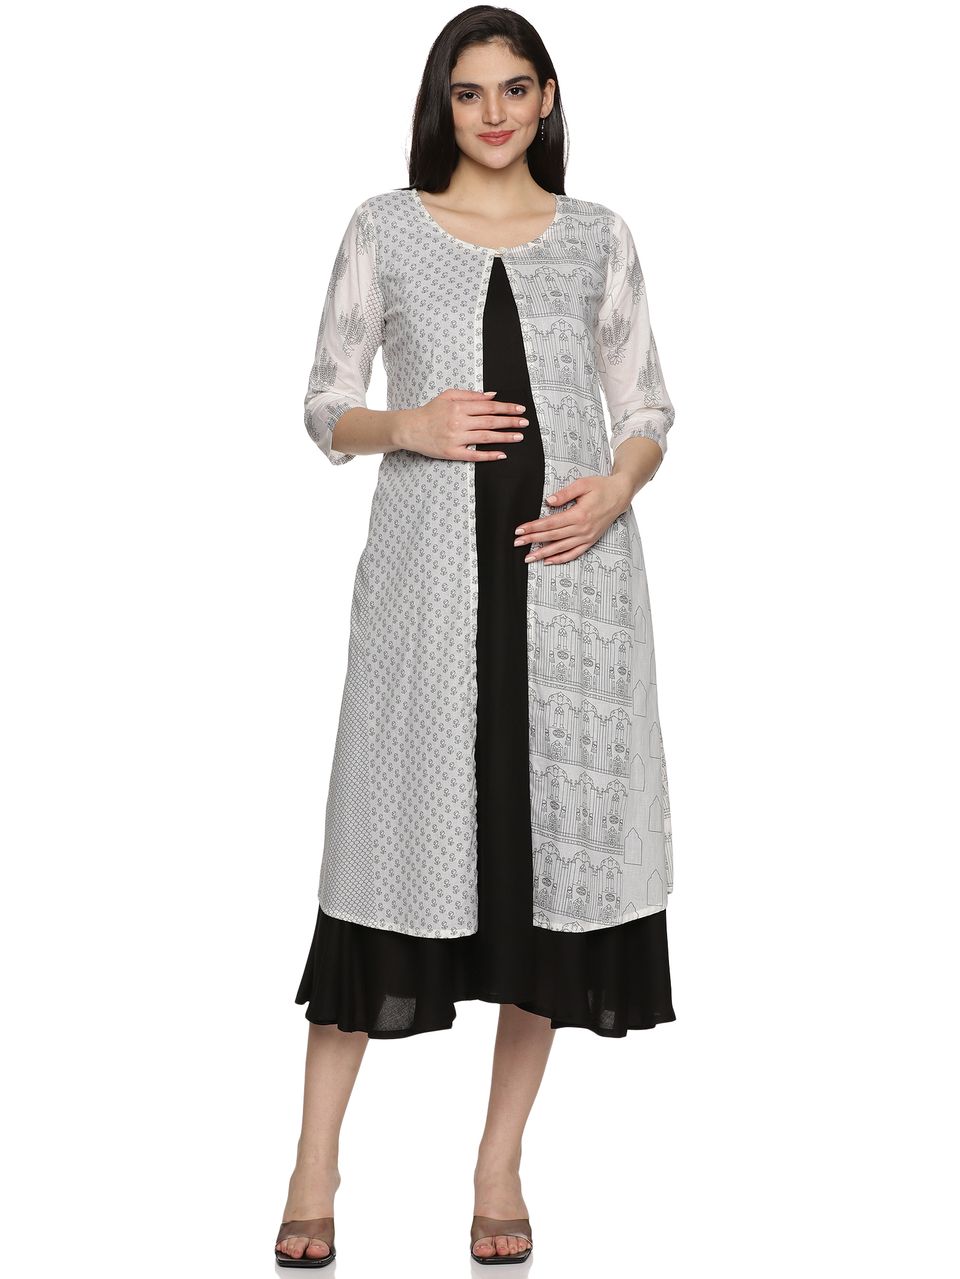 Charismomic Snowflair printed jacket maternity and nursing dress